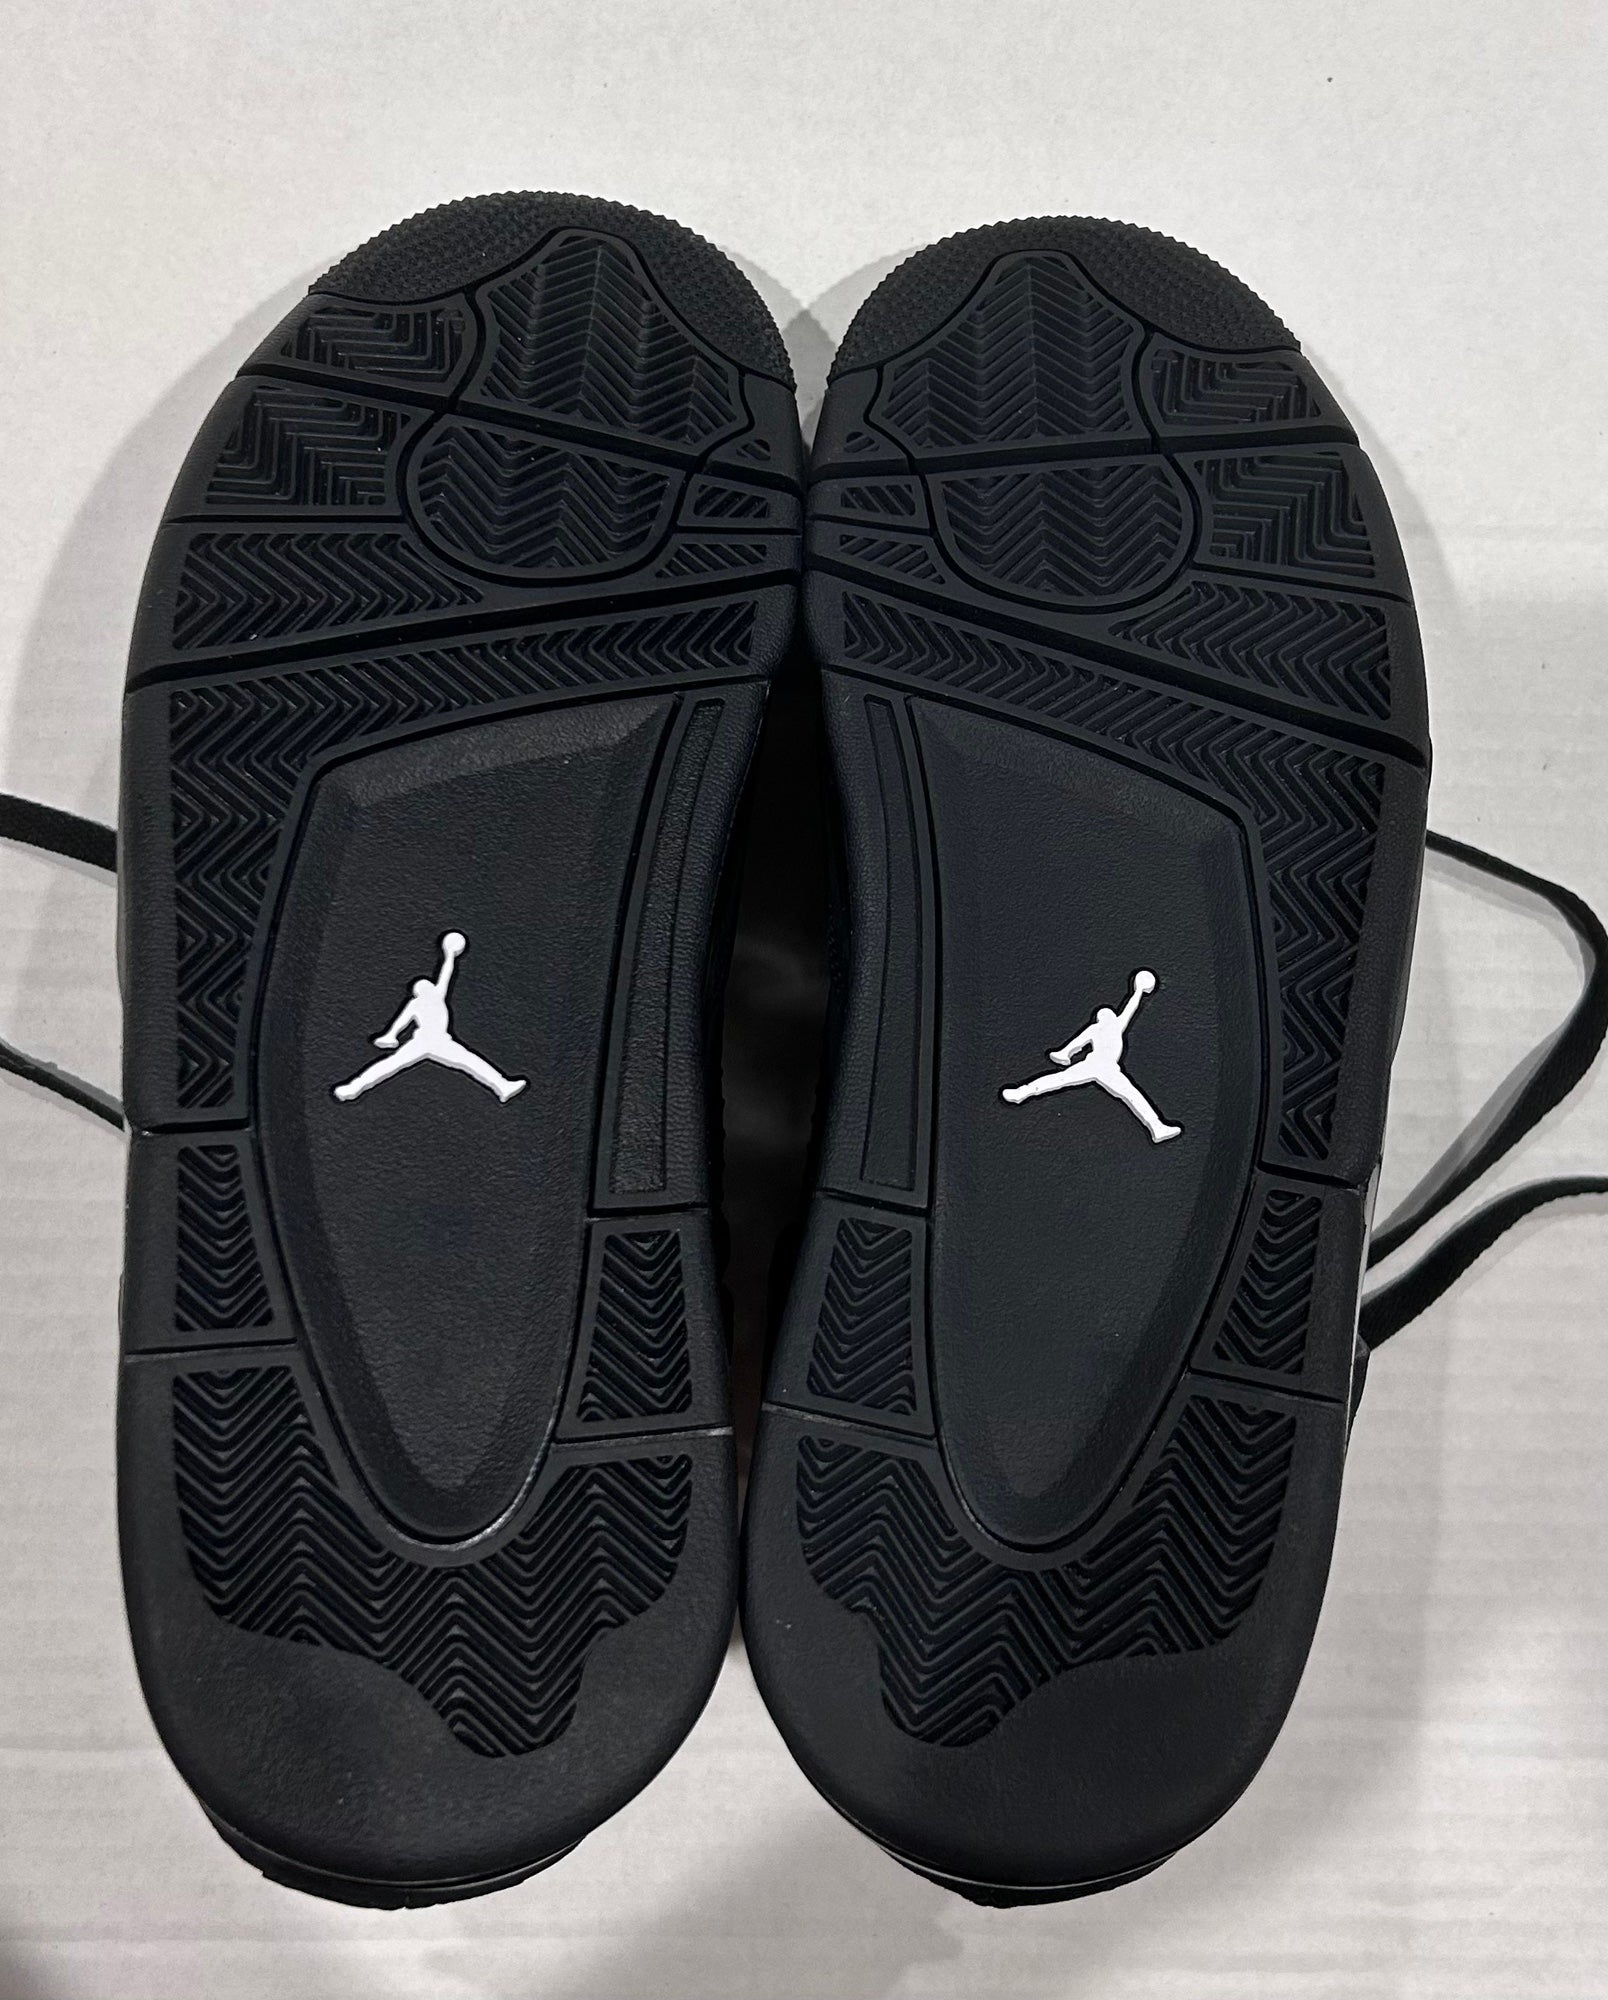 Jordan 4 Black Cat $650 Size 12 Used With Box *SHOP EVERYTHING